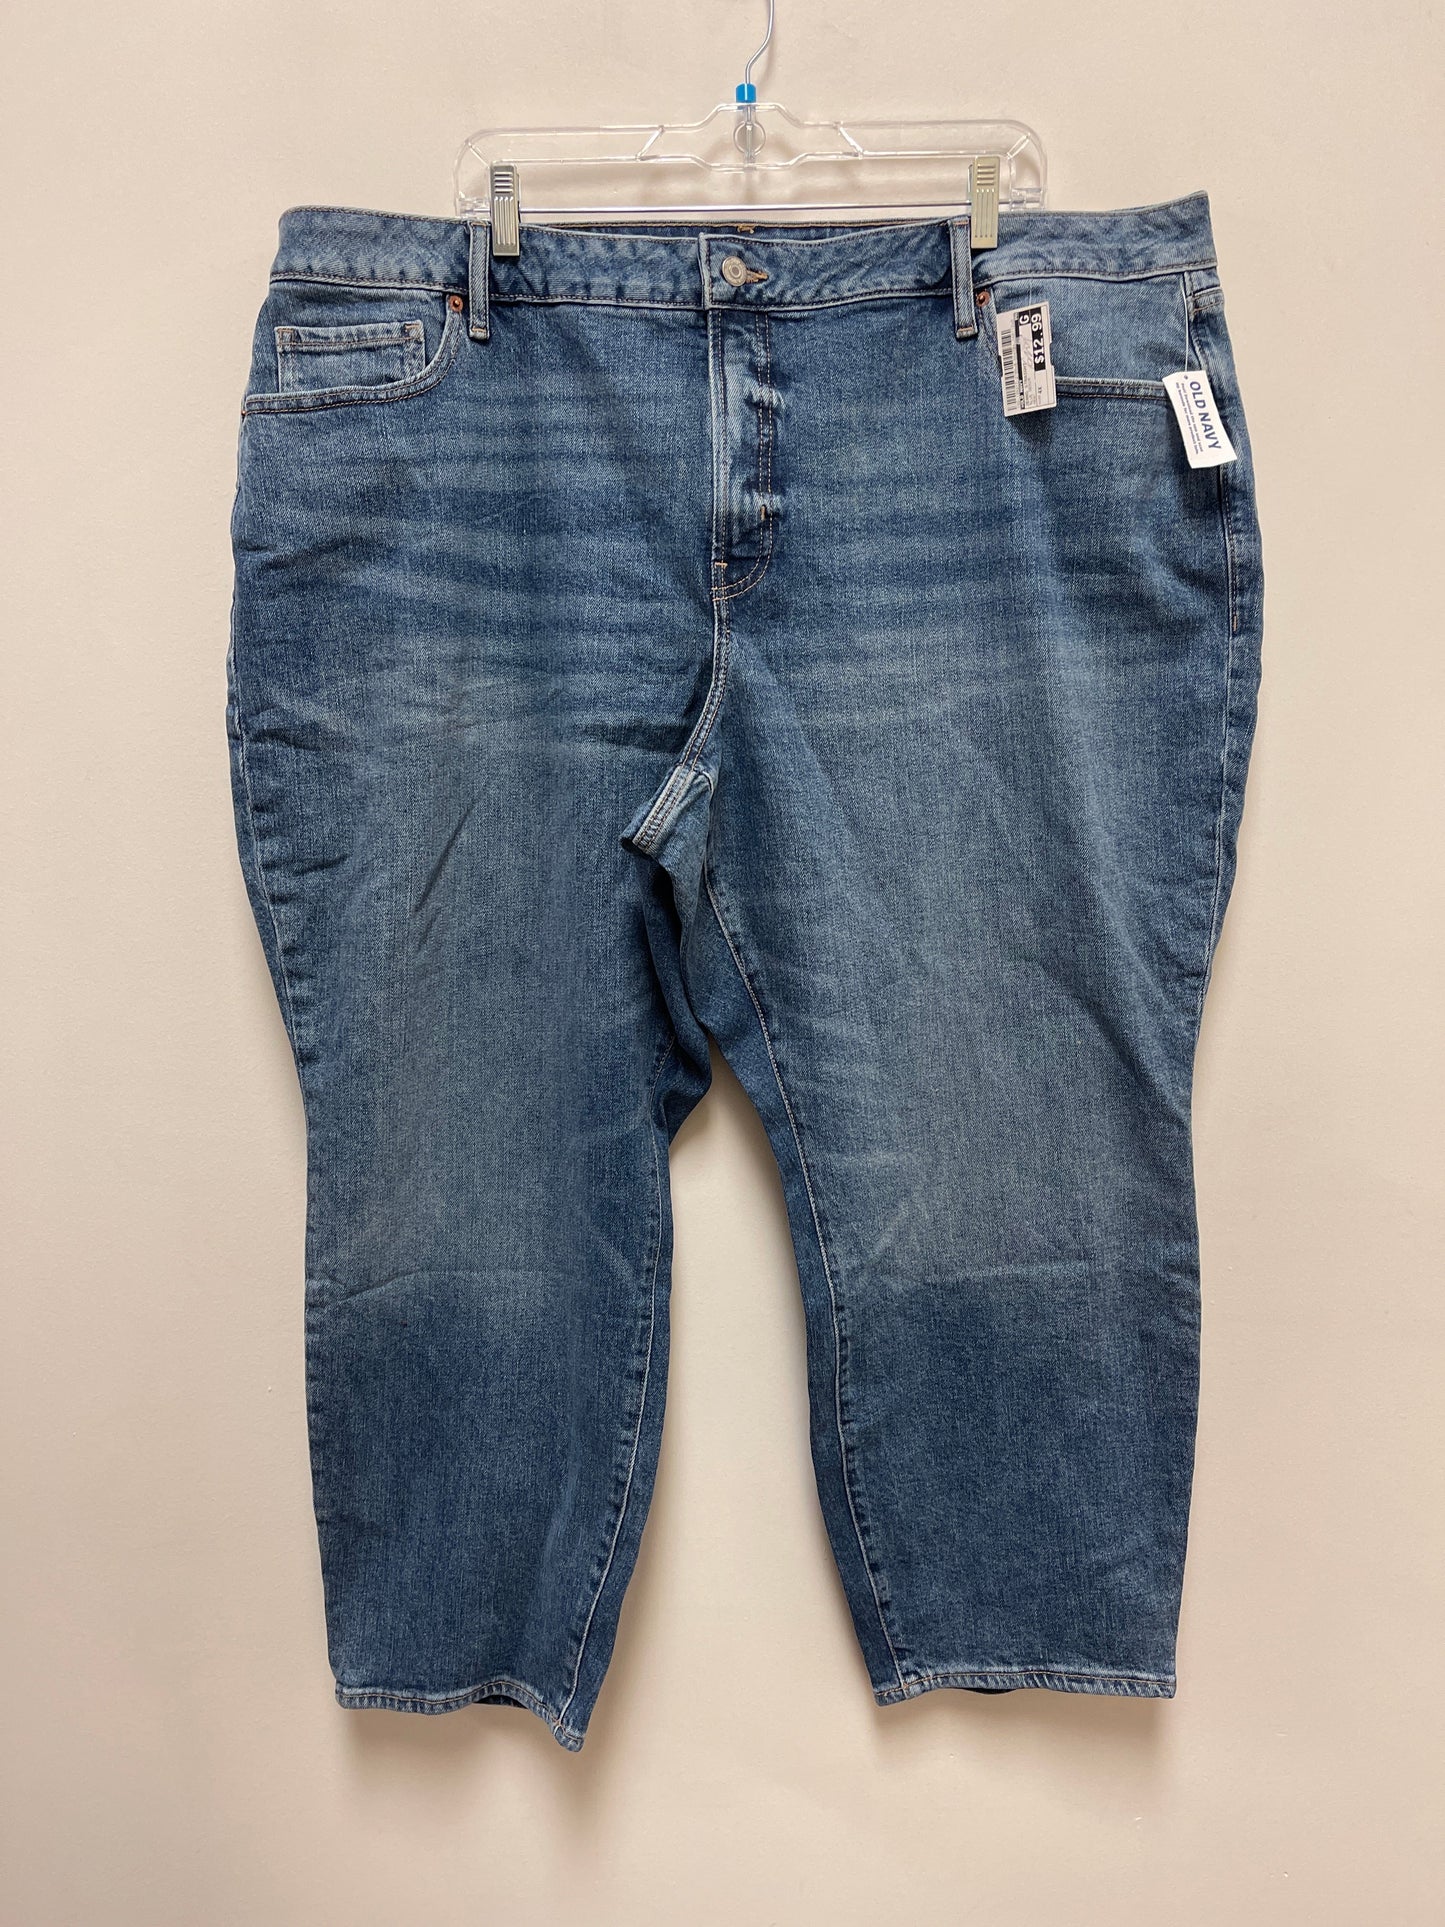 Blue Denim Jeans Straight Old Navy, Size 4x